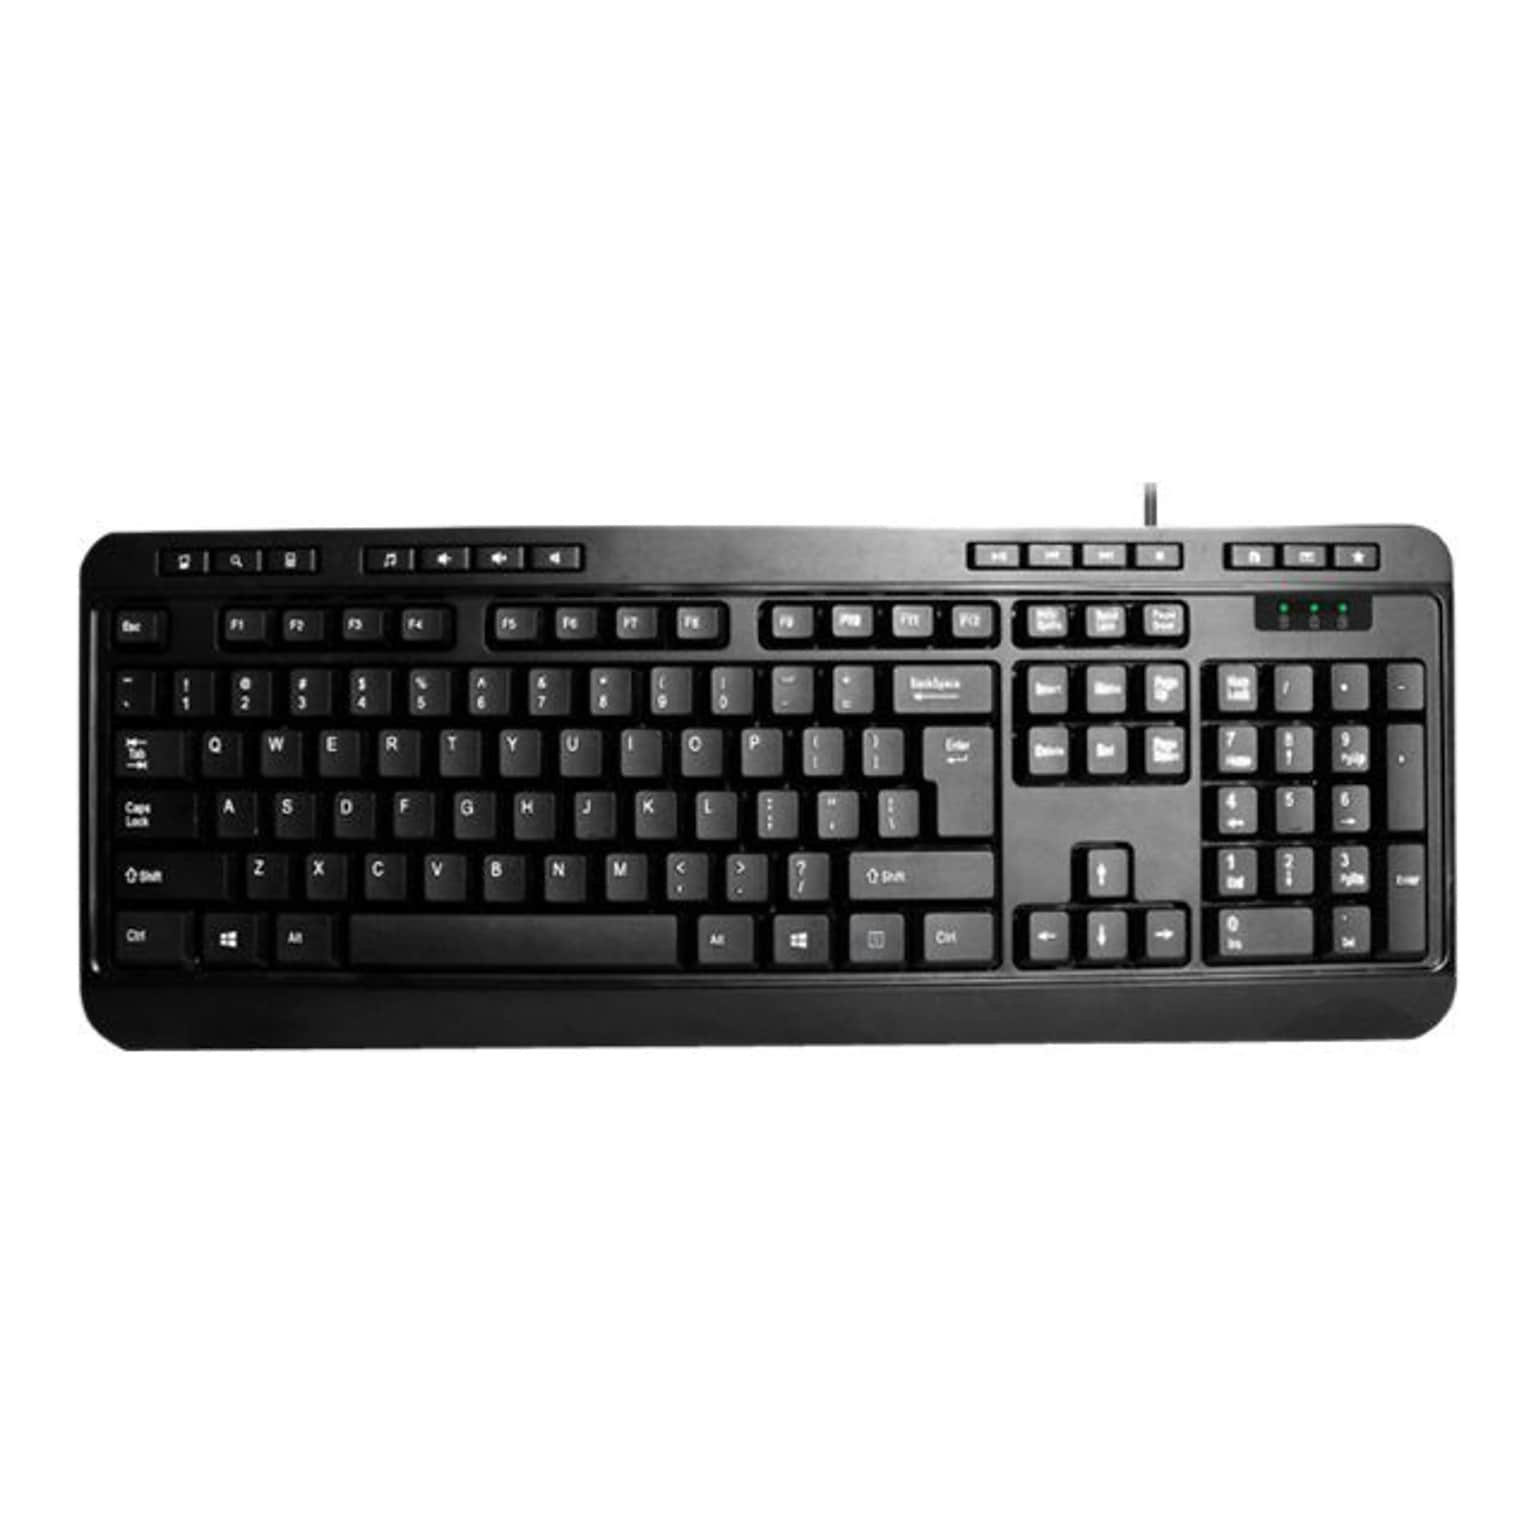 Adesso Multimedia Desktop Wired Gaming Keyboard, Black (AKB-132PB)